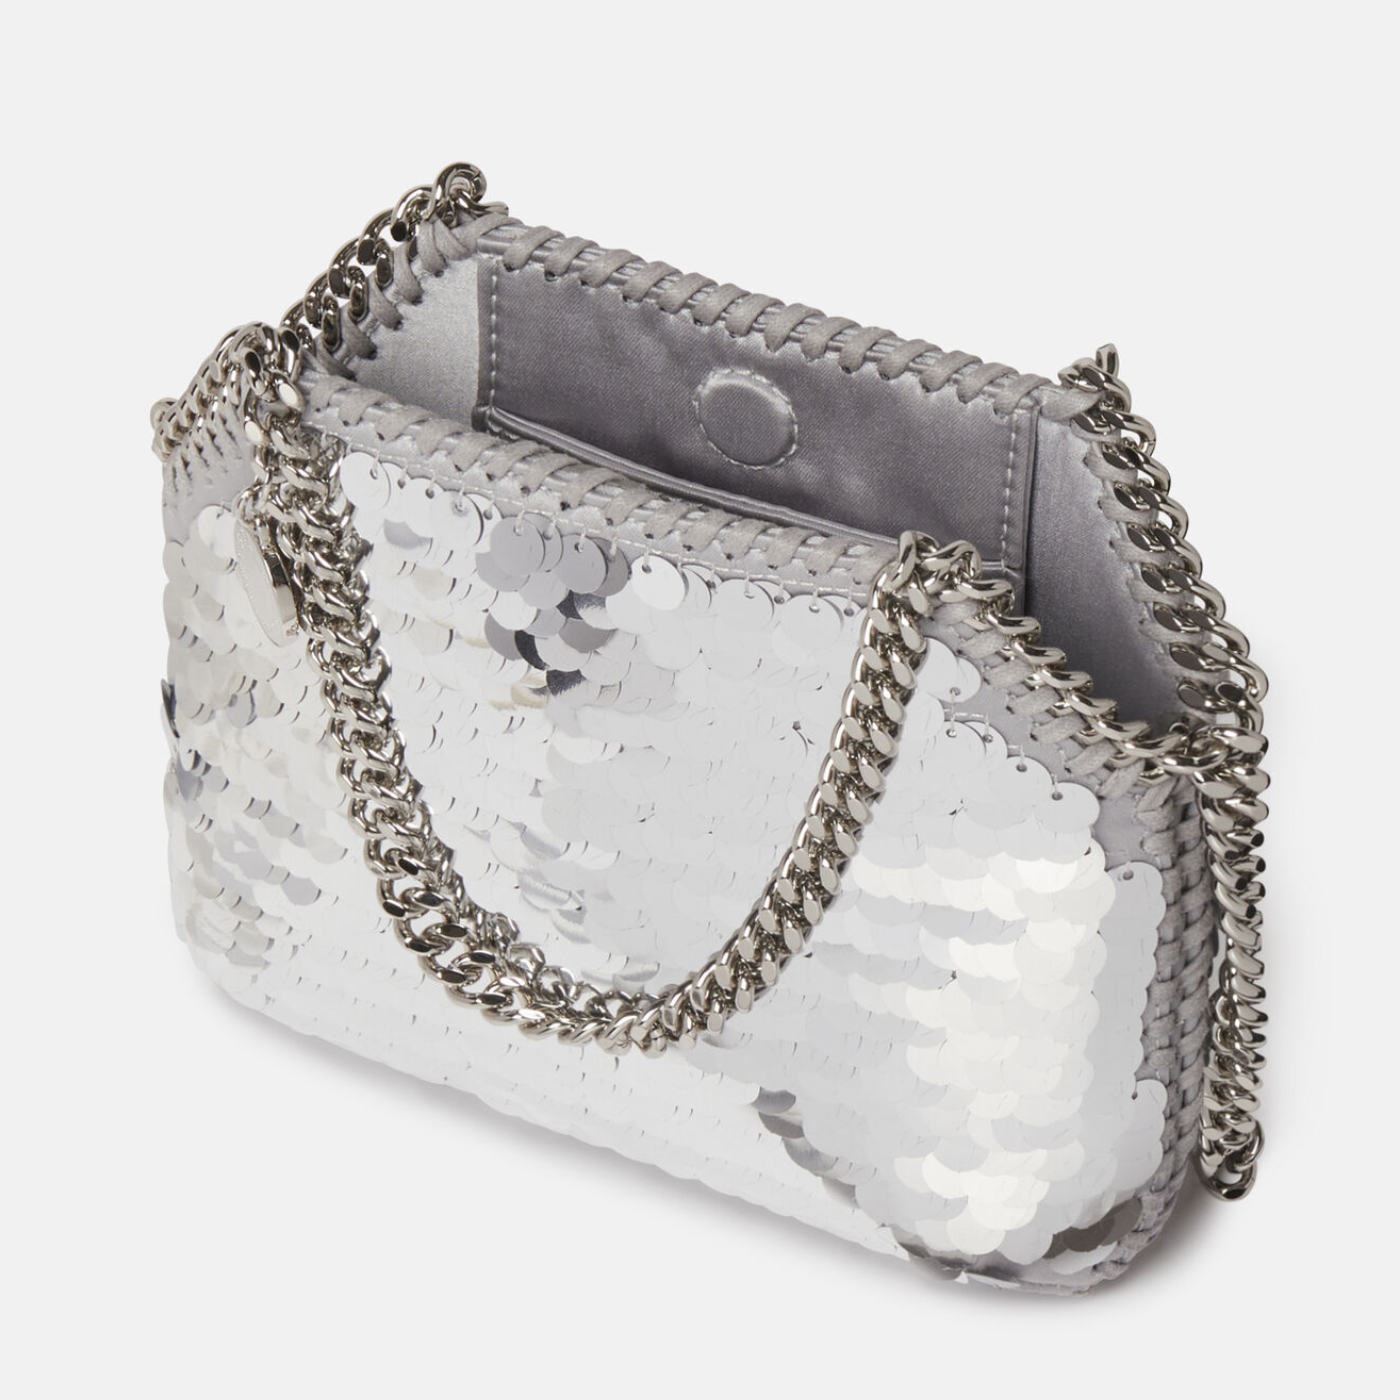 Falabella Sequin Mini Tote Bag in Silver Handbags STELLA MCCARTNEY - LOLAMIR